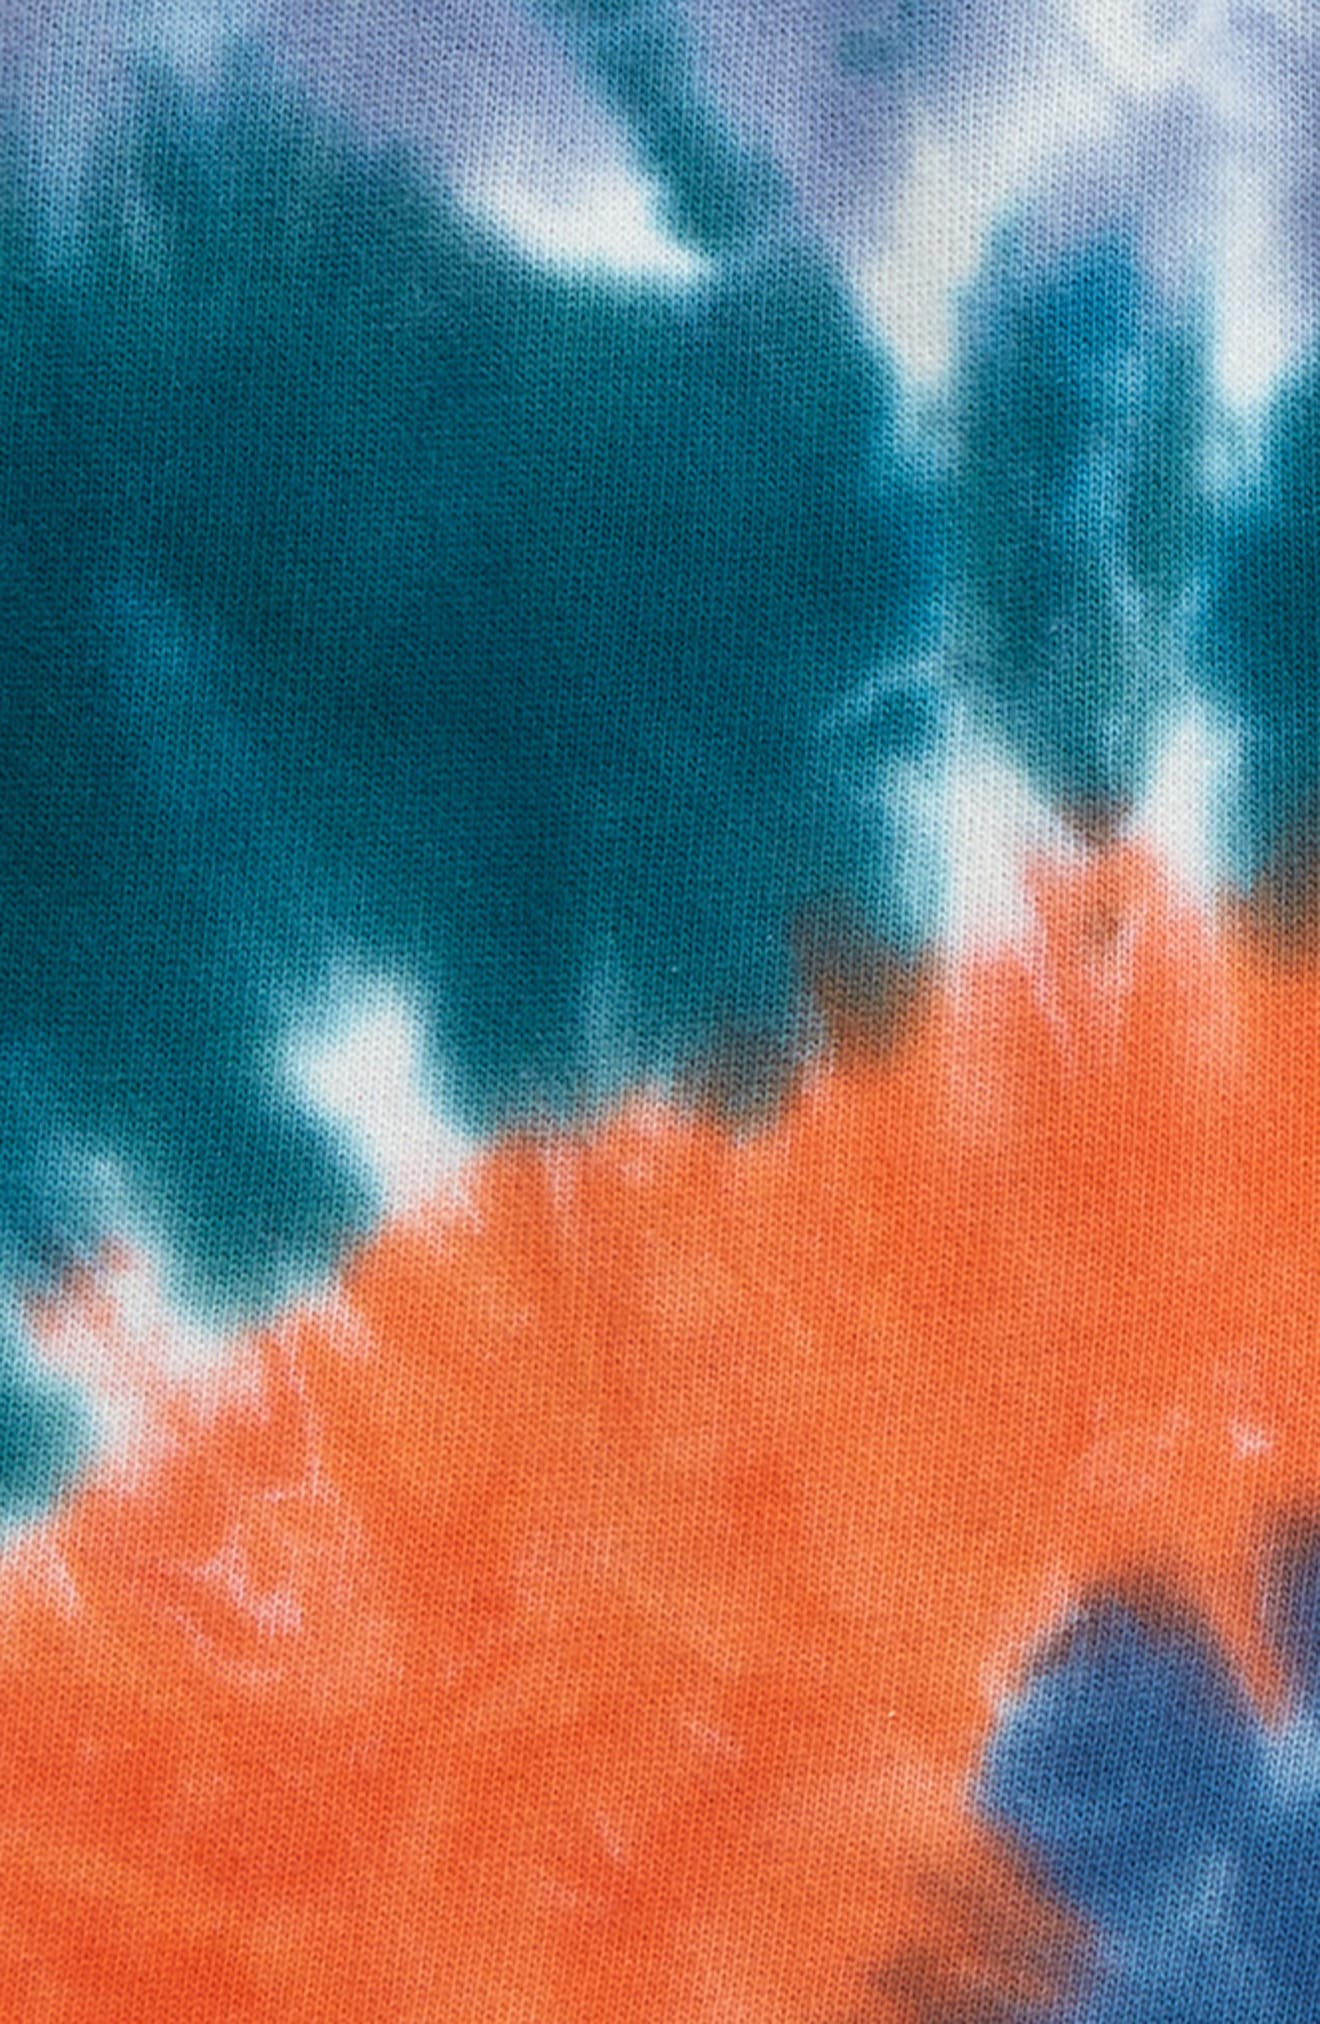 Blue and Orange Swirl Size X-Large 100% Cotton Boxer Briefs Tie dye Boxer Brief